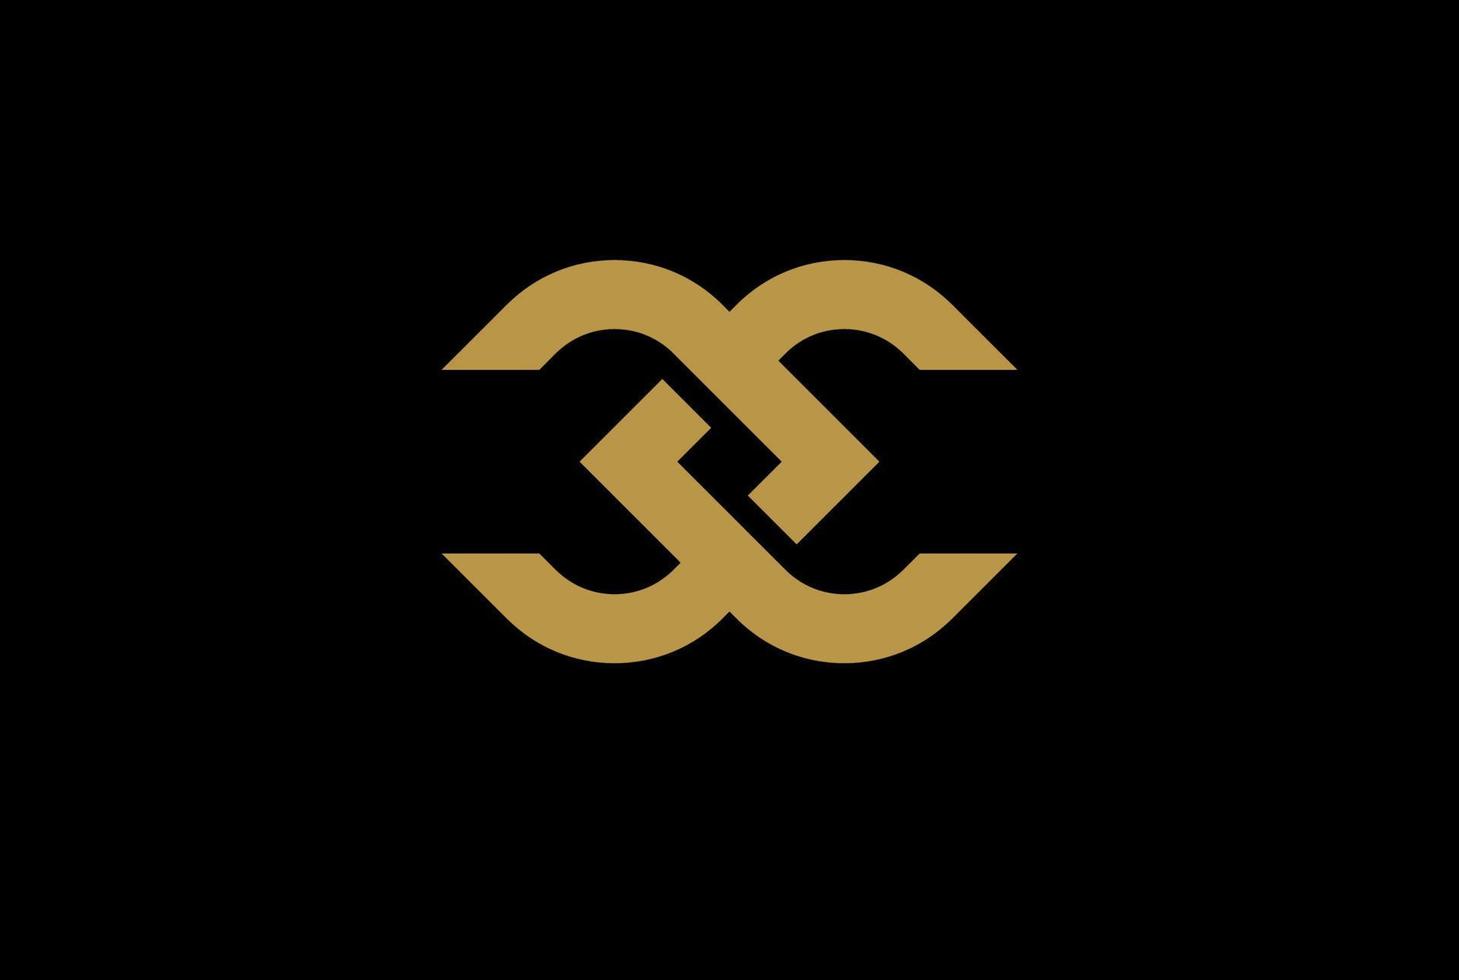 elegante lujo letra inicial cc cj jc gj jg jj monograma cadena gen logo diseño vector